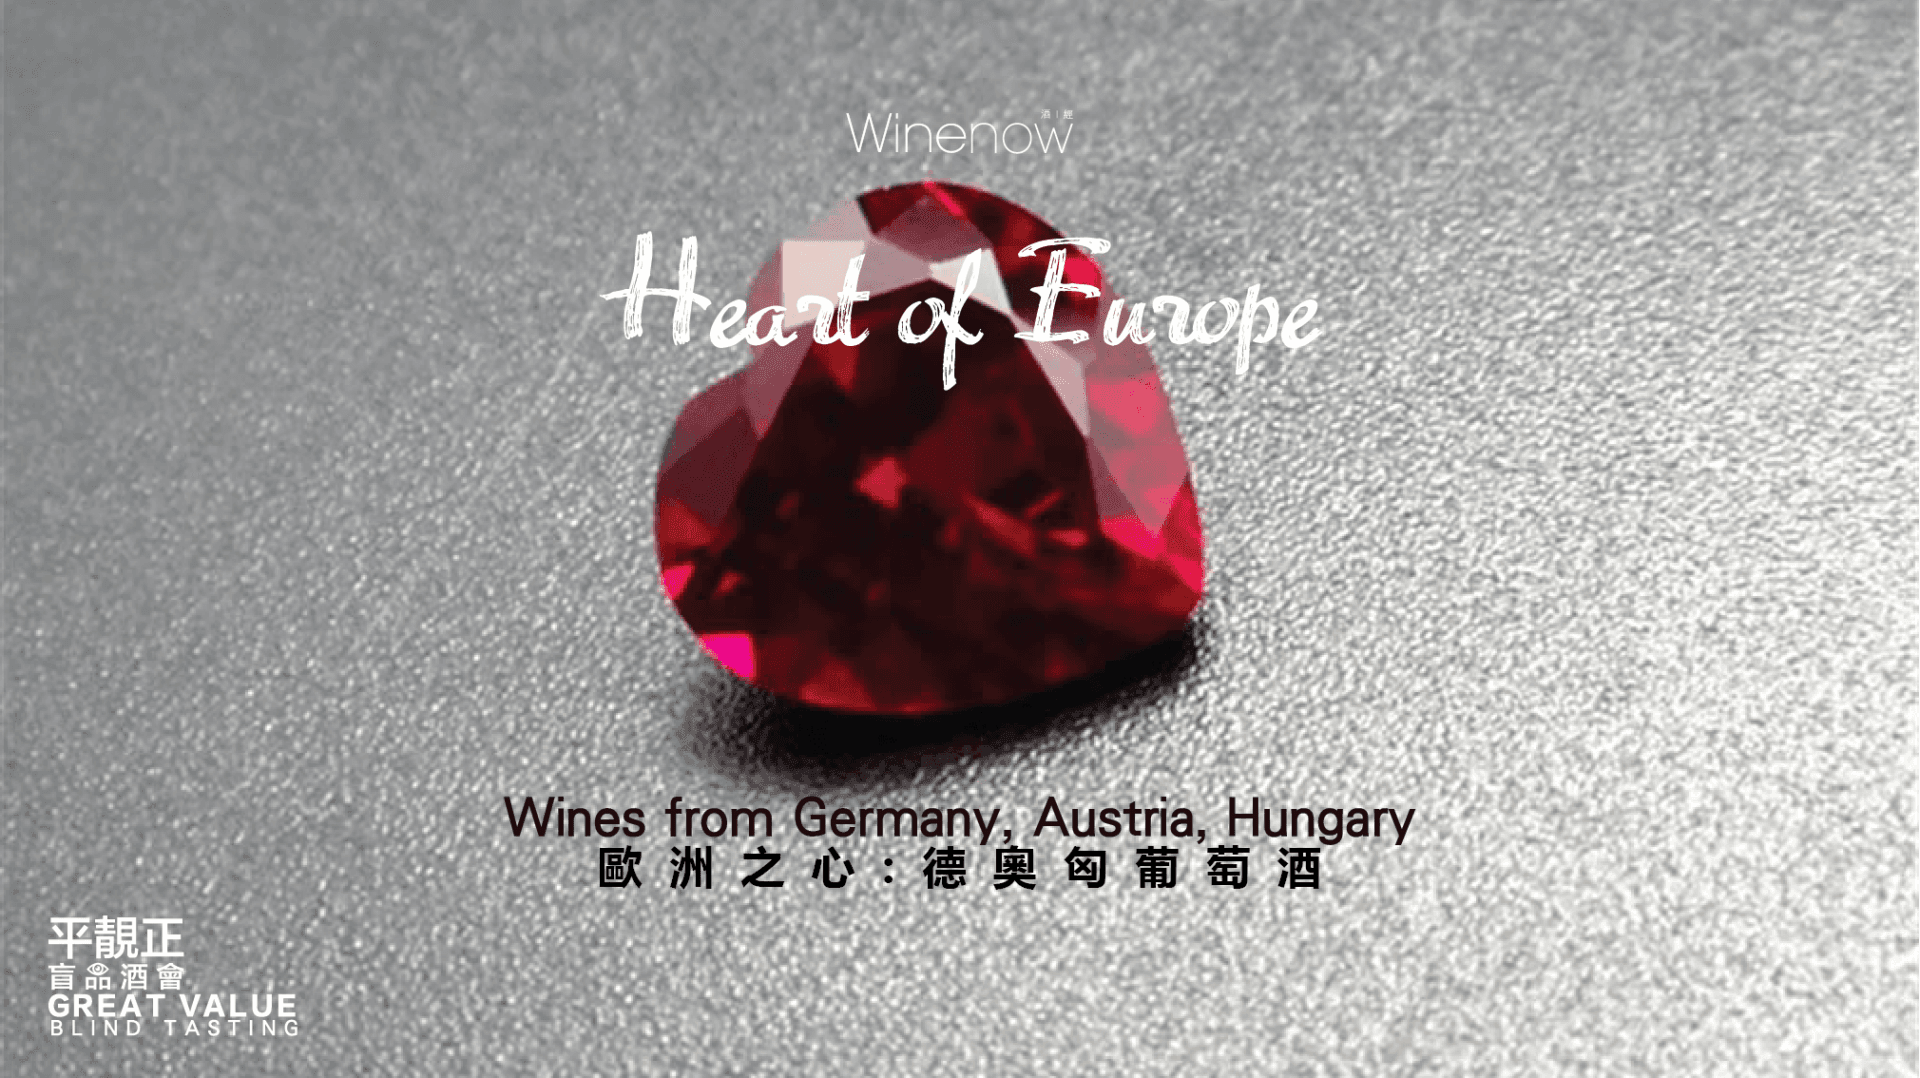 Great-Value Blind Tasting: Heart of Europe - WineNow HK